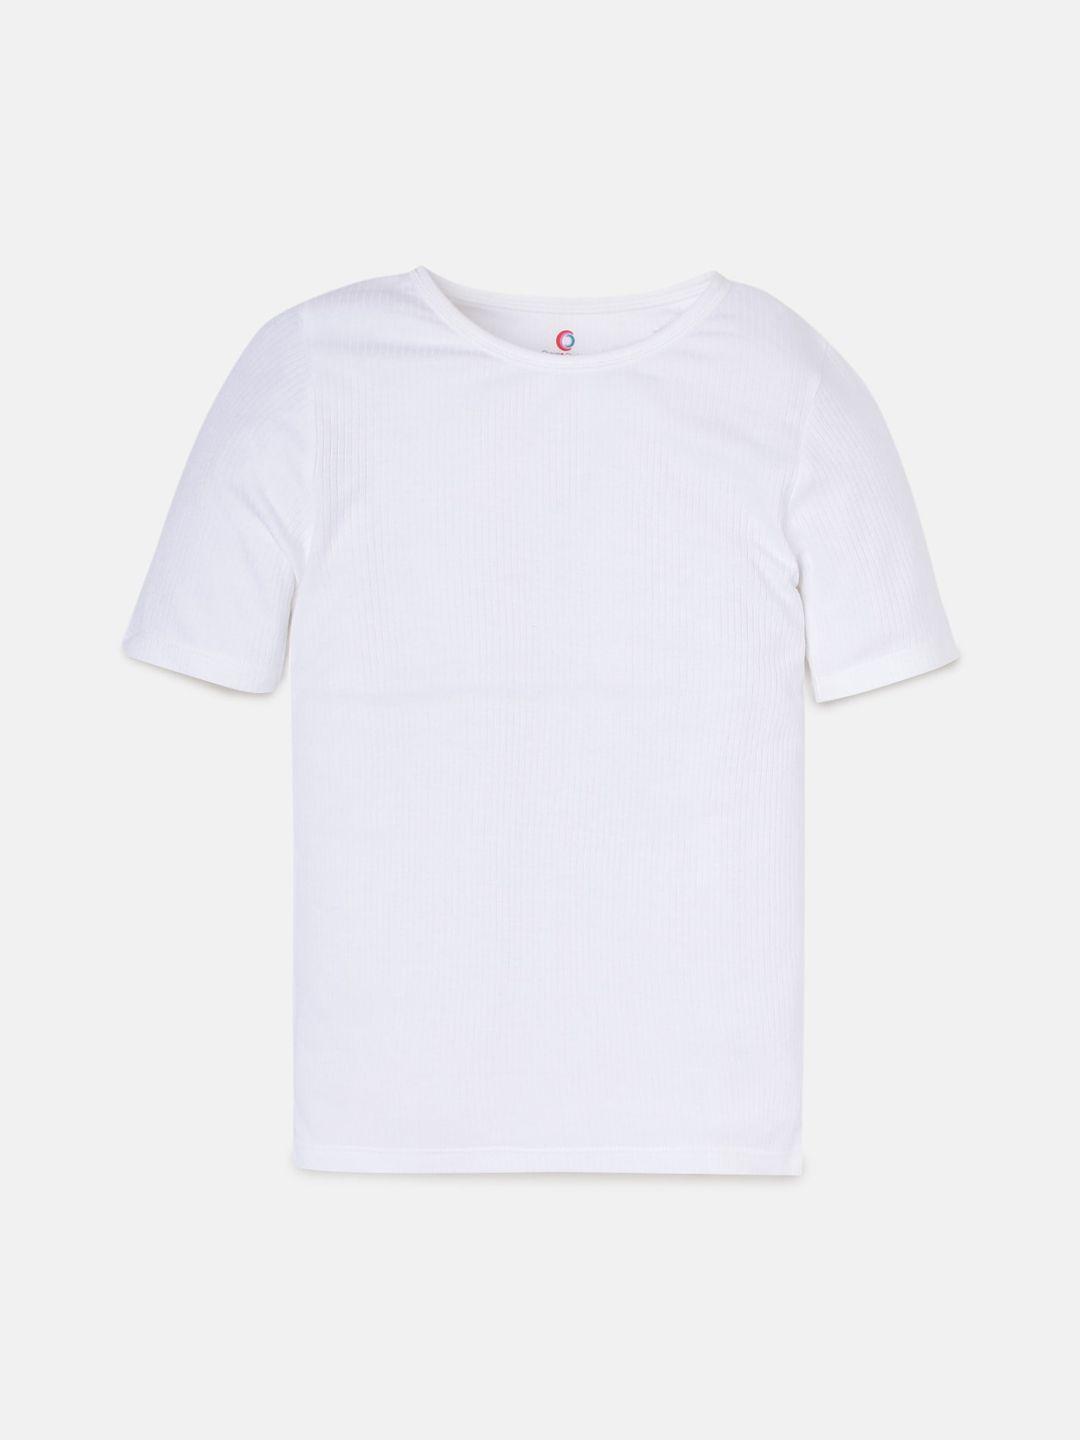 charm n cherish unisex kids white solid thermal t-shirt